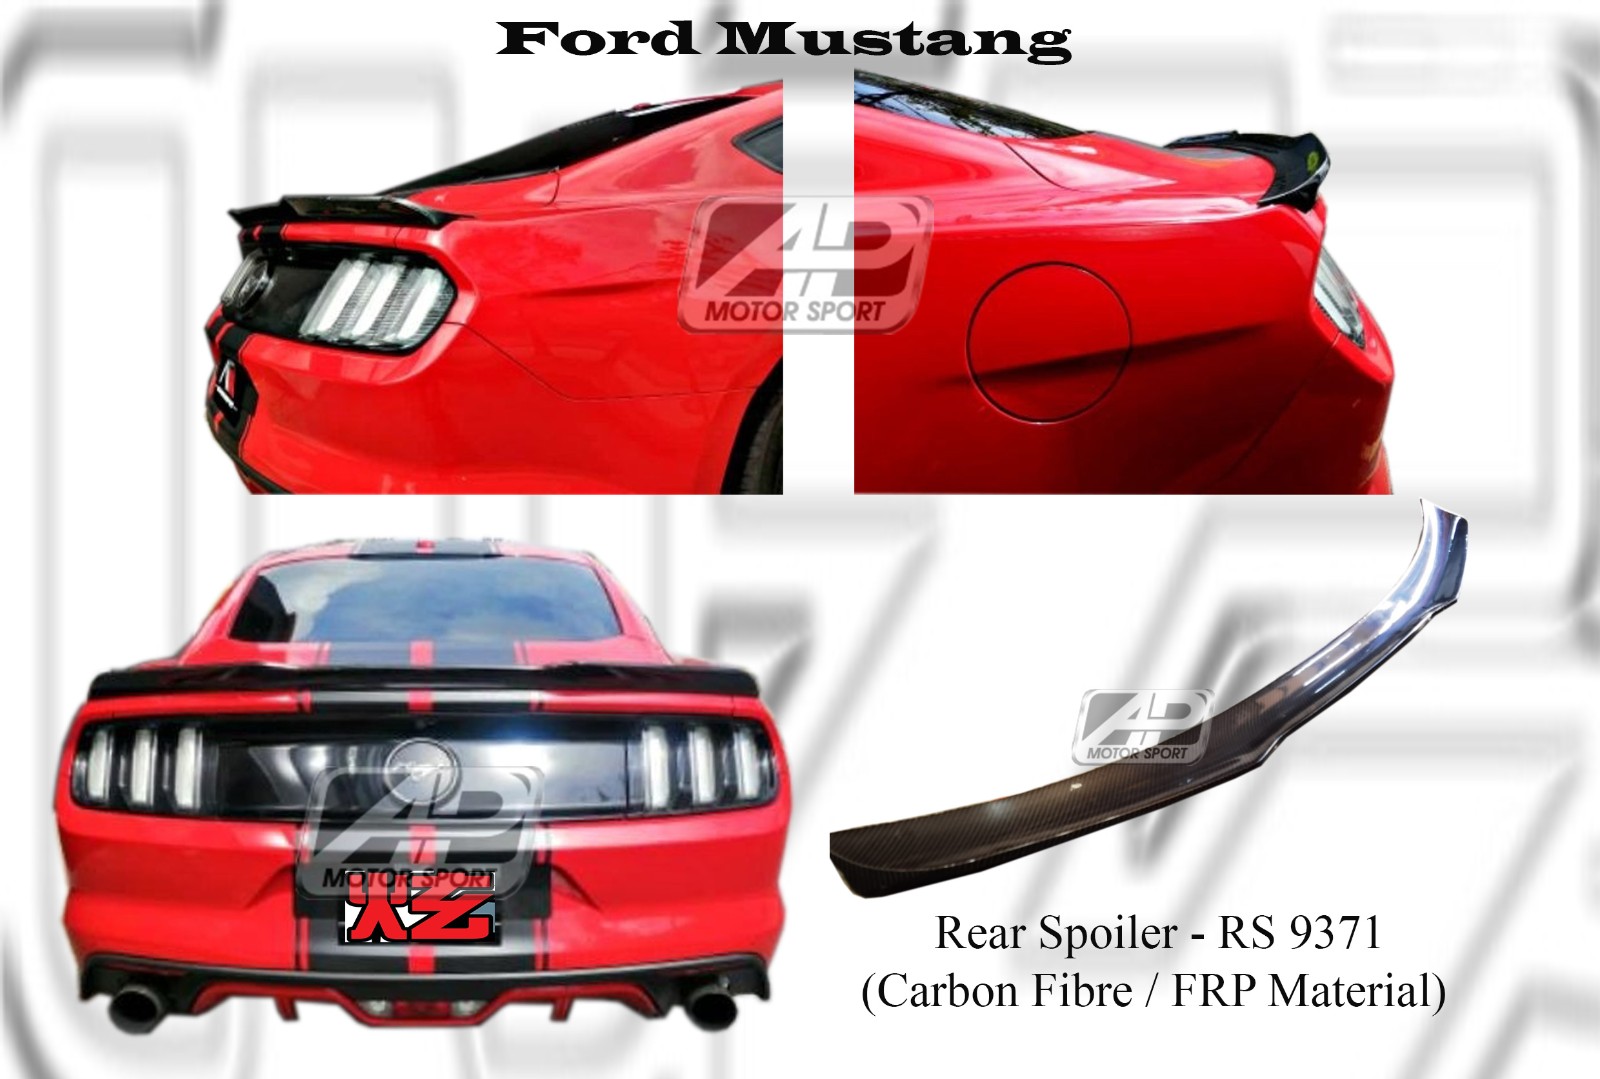 Ford Mustang Rear Spoiler (Carbon Fibre / FRP Material) 